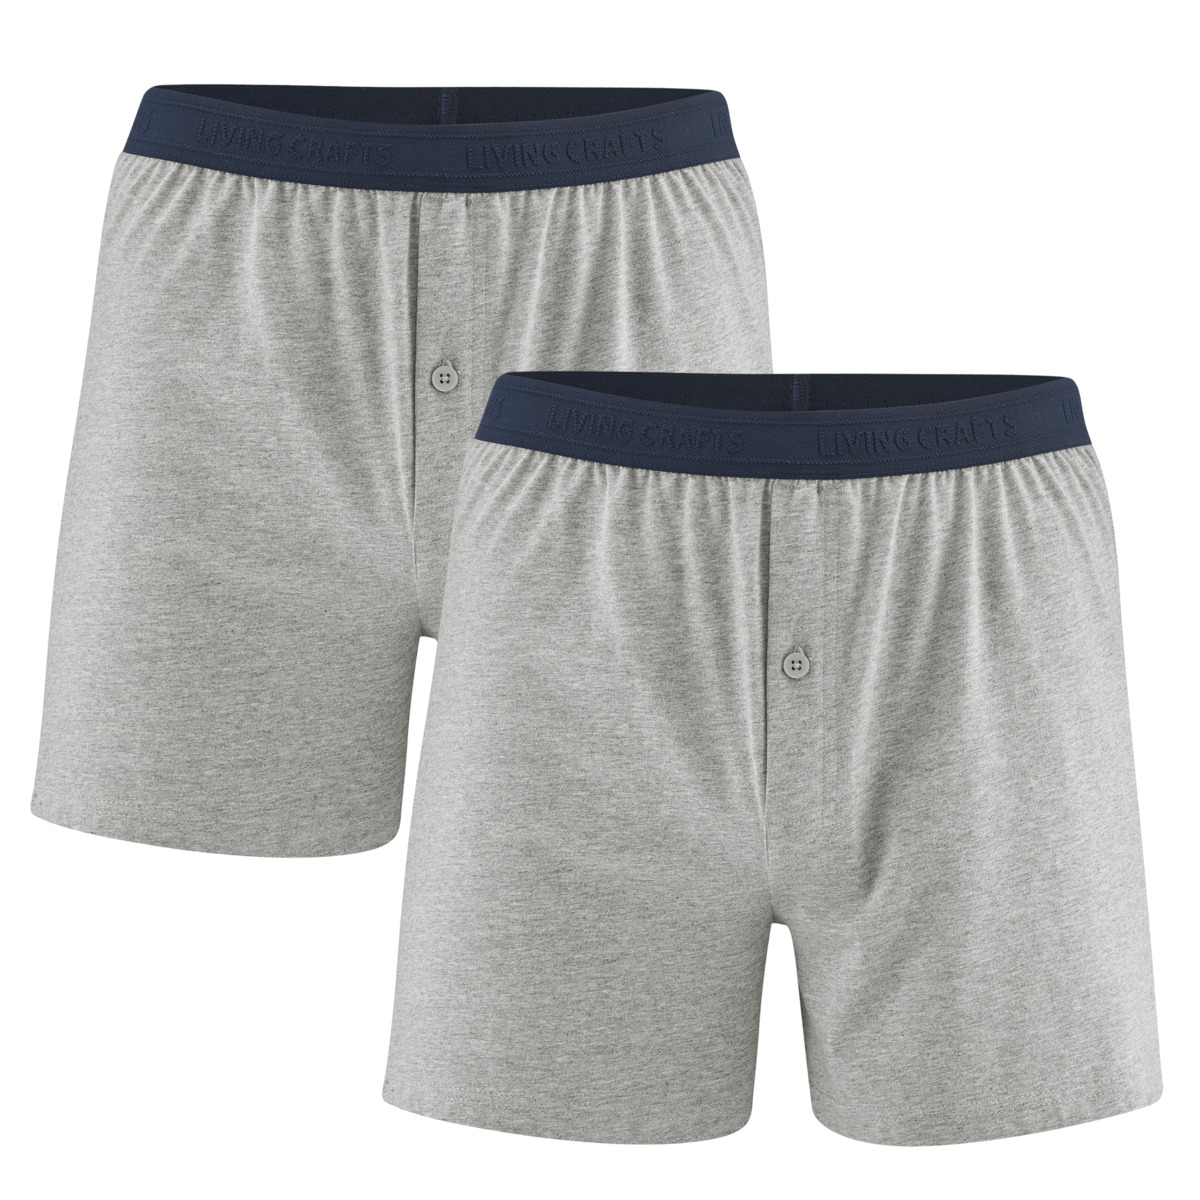 Grau Boxer-Shorts, 2er-Pack, ETHAN